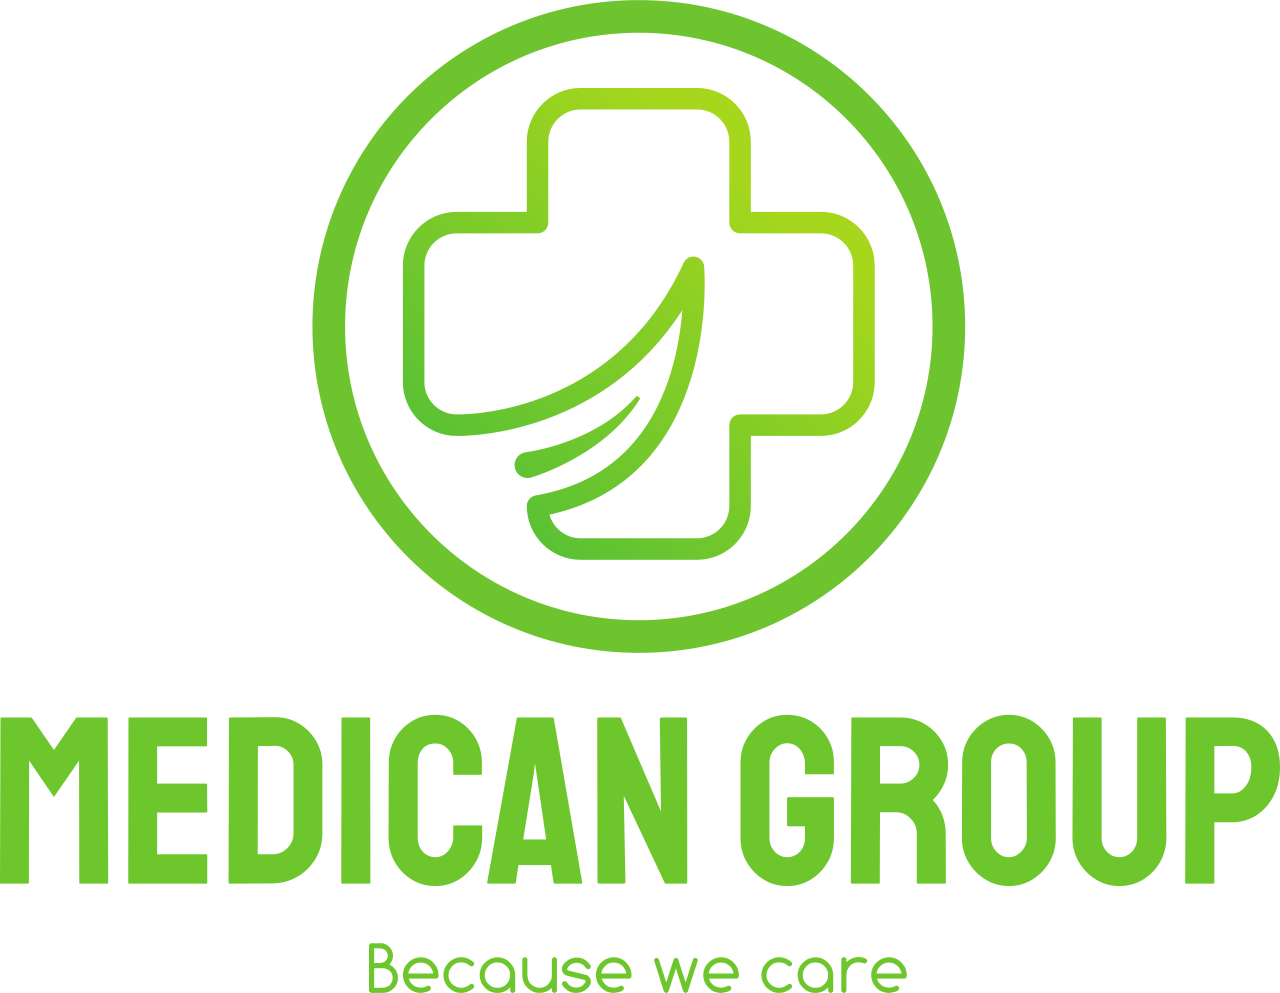 Medican Group's logo